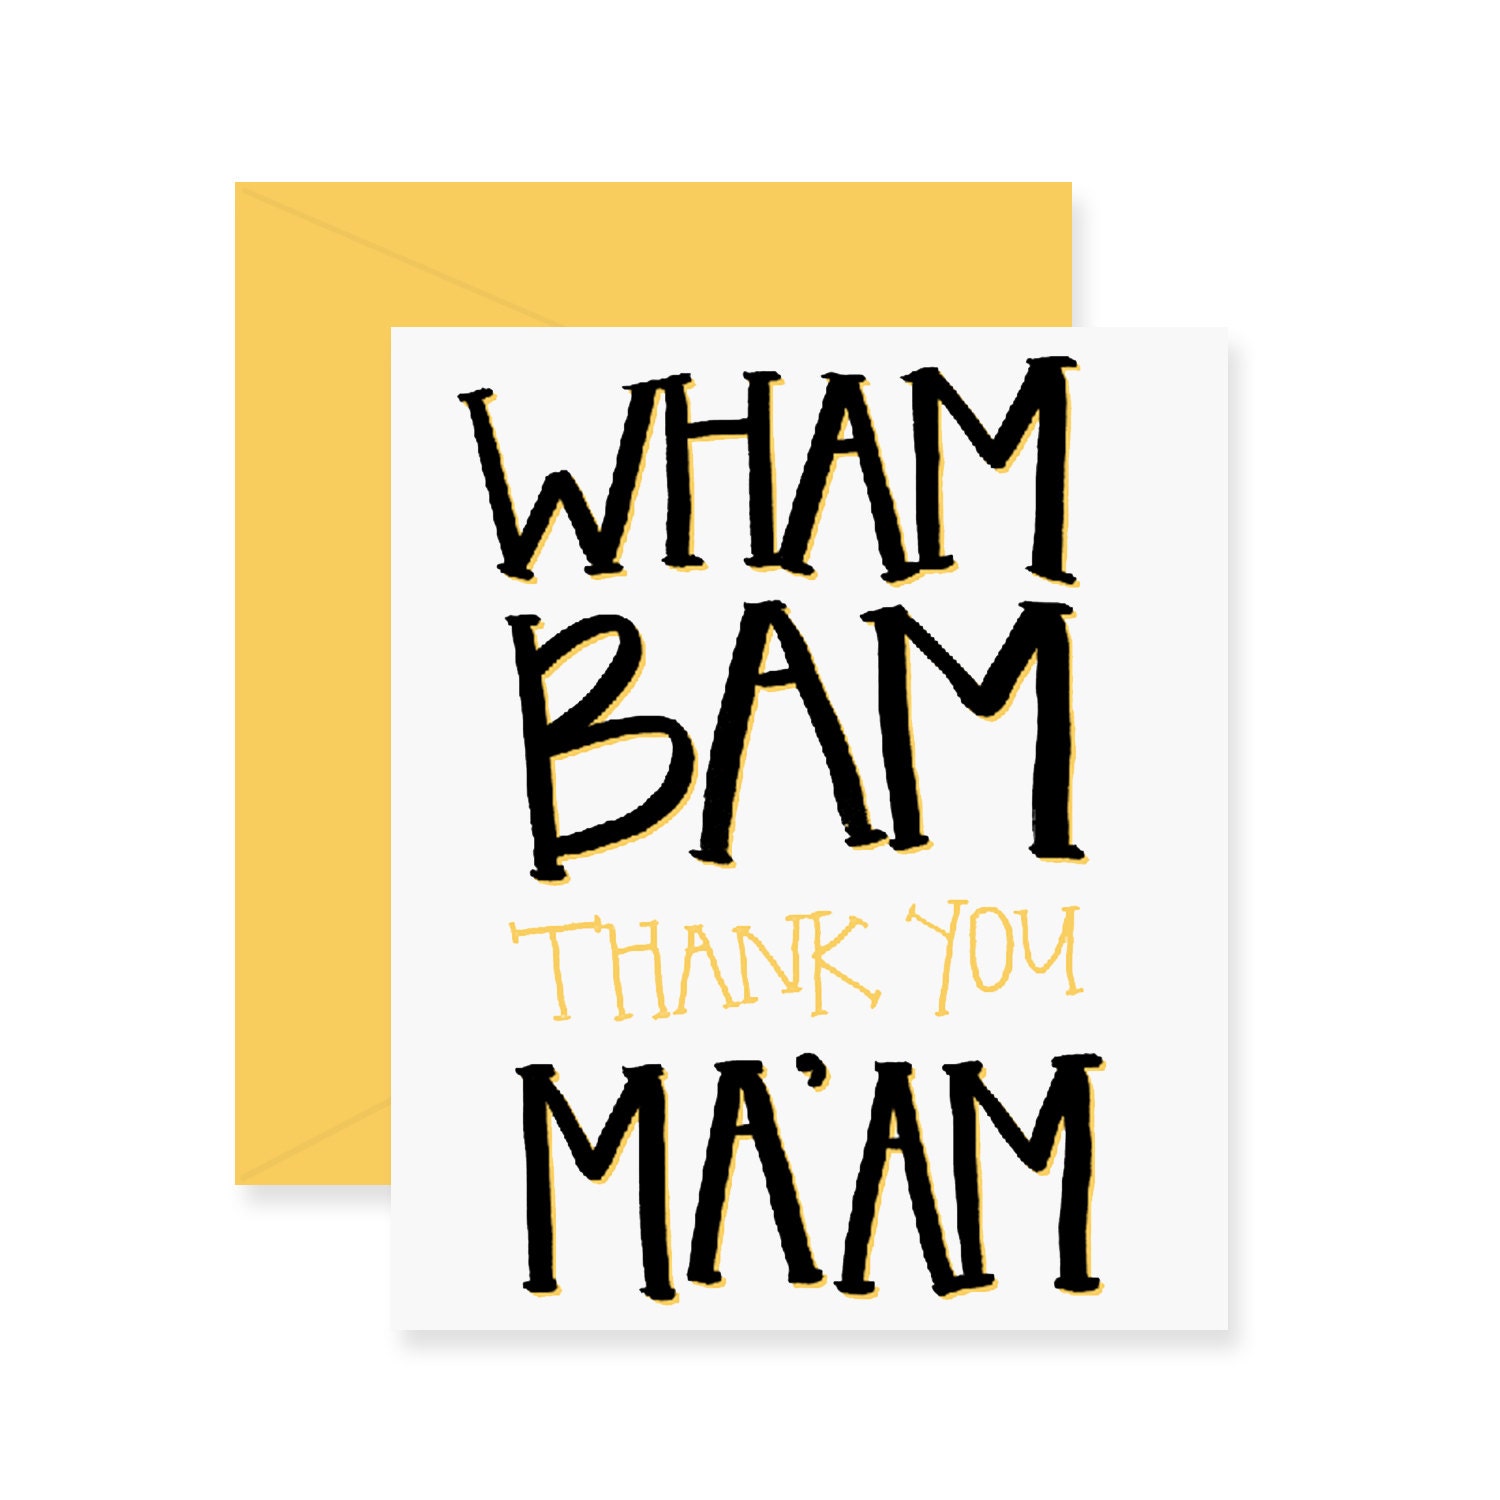 Wham Bam Thank You Maam Greeting Card Thanks Card 2034